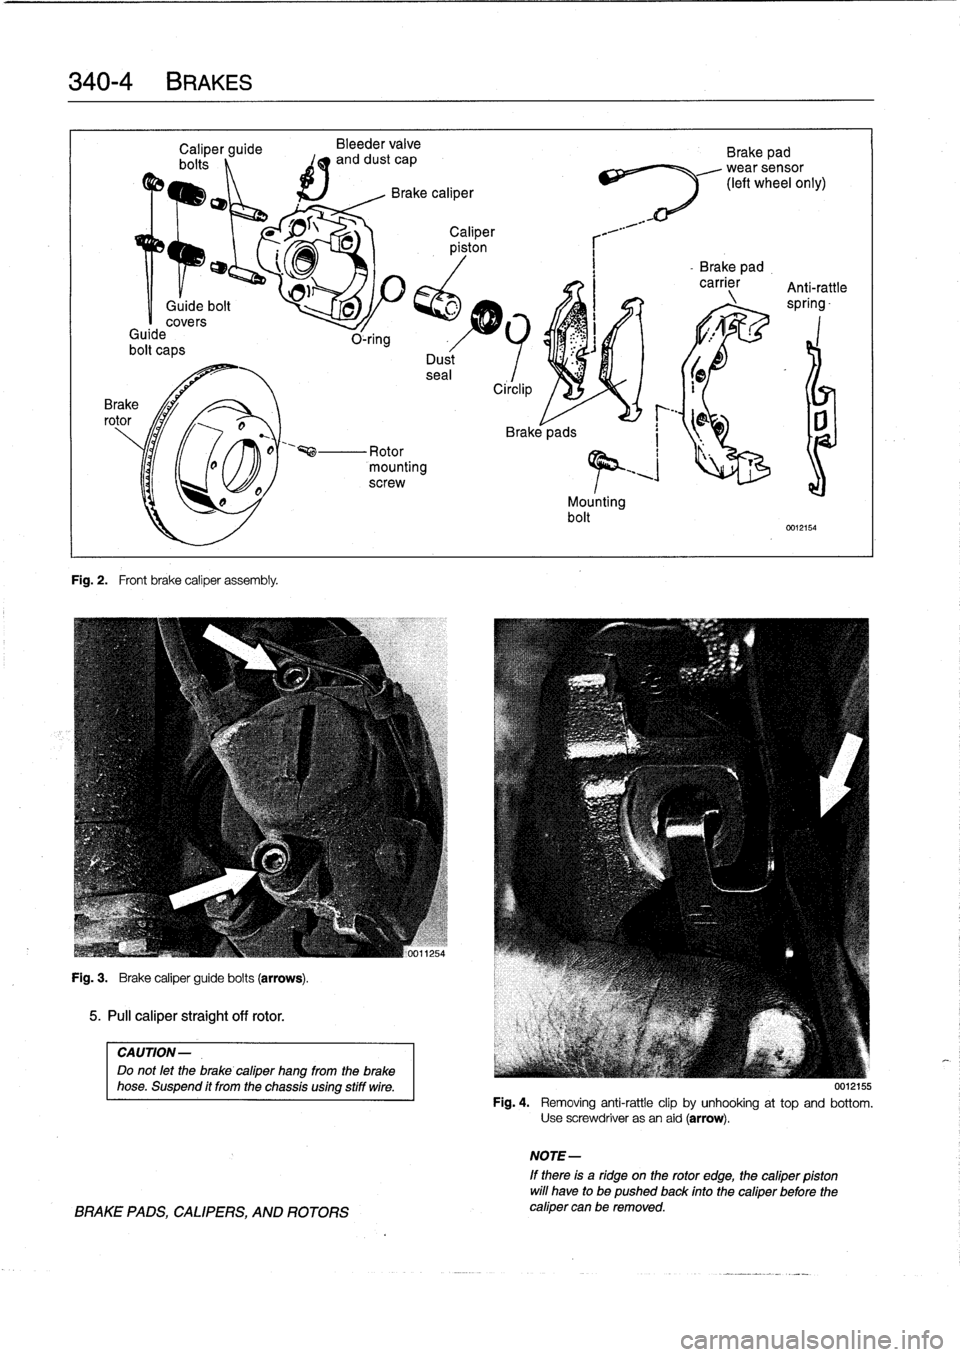 BMW 323i 1993 E36 Owners Guide 
340-
4
BRAKES

Fig
.
2
.

	

Front
brake
caliper
assembly
.

Bleeder
valve
and
dust
cap

Mounting
bolt

Brake
pad
wearsensor
(left
wheel
only)

-
Brake
pad
.
carrier
Anti-rattle
^_
spring-

0012154

